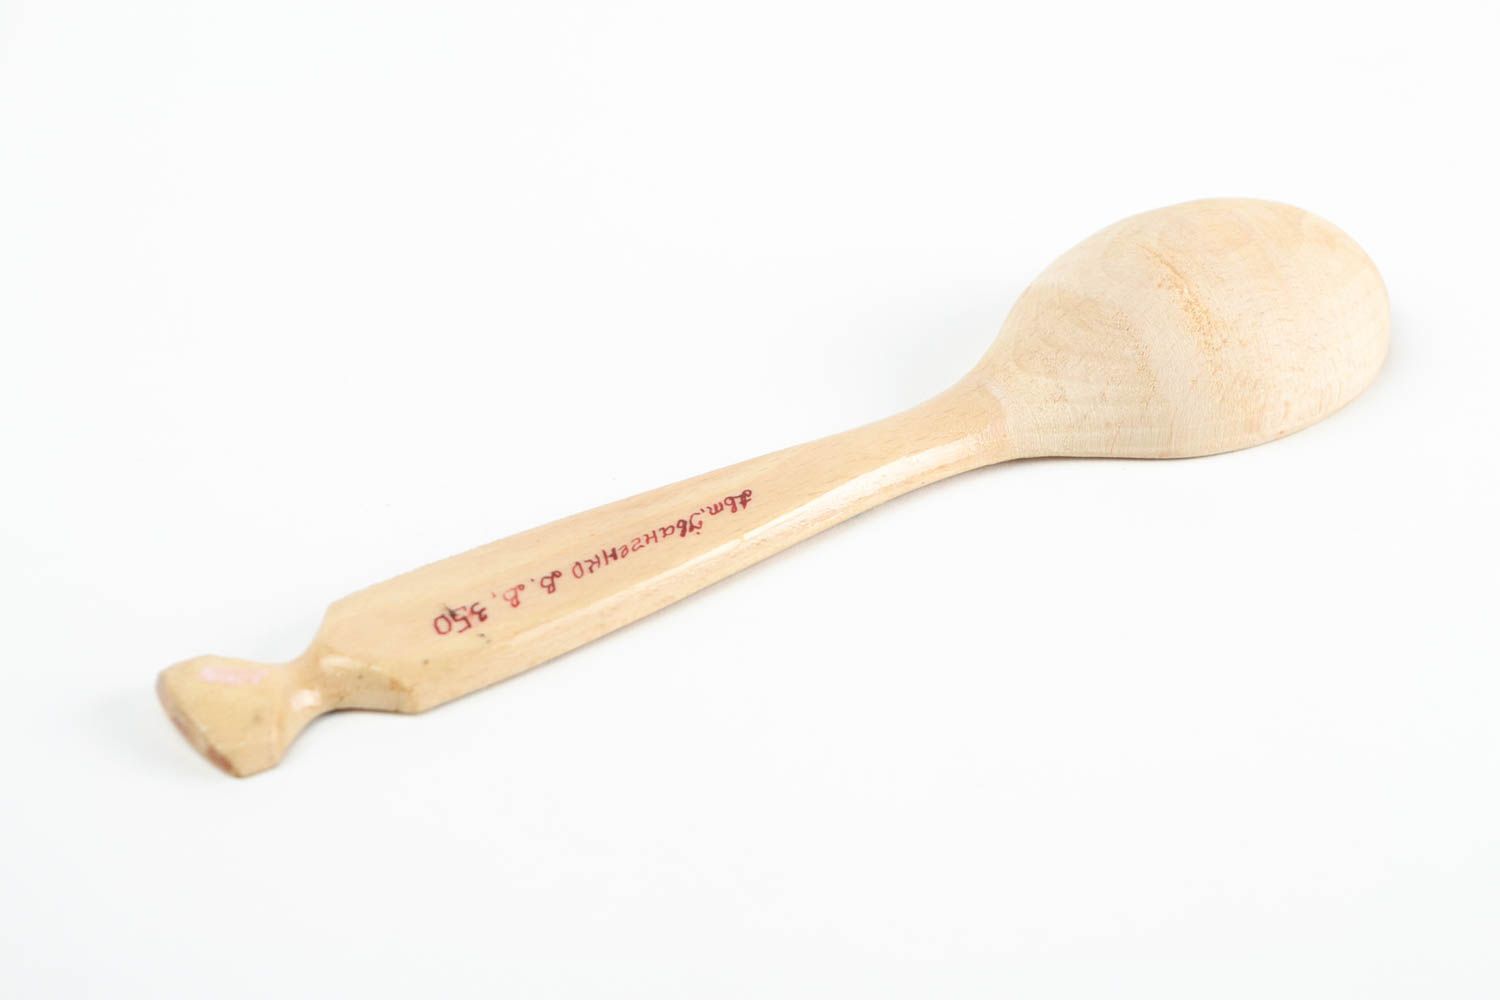 Handmade spoon designer spoon wooden cutlery gift ideas decor ideas unusul spoon photo 5